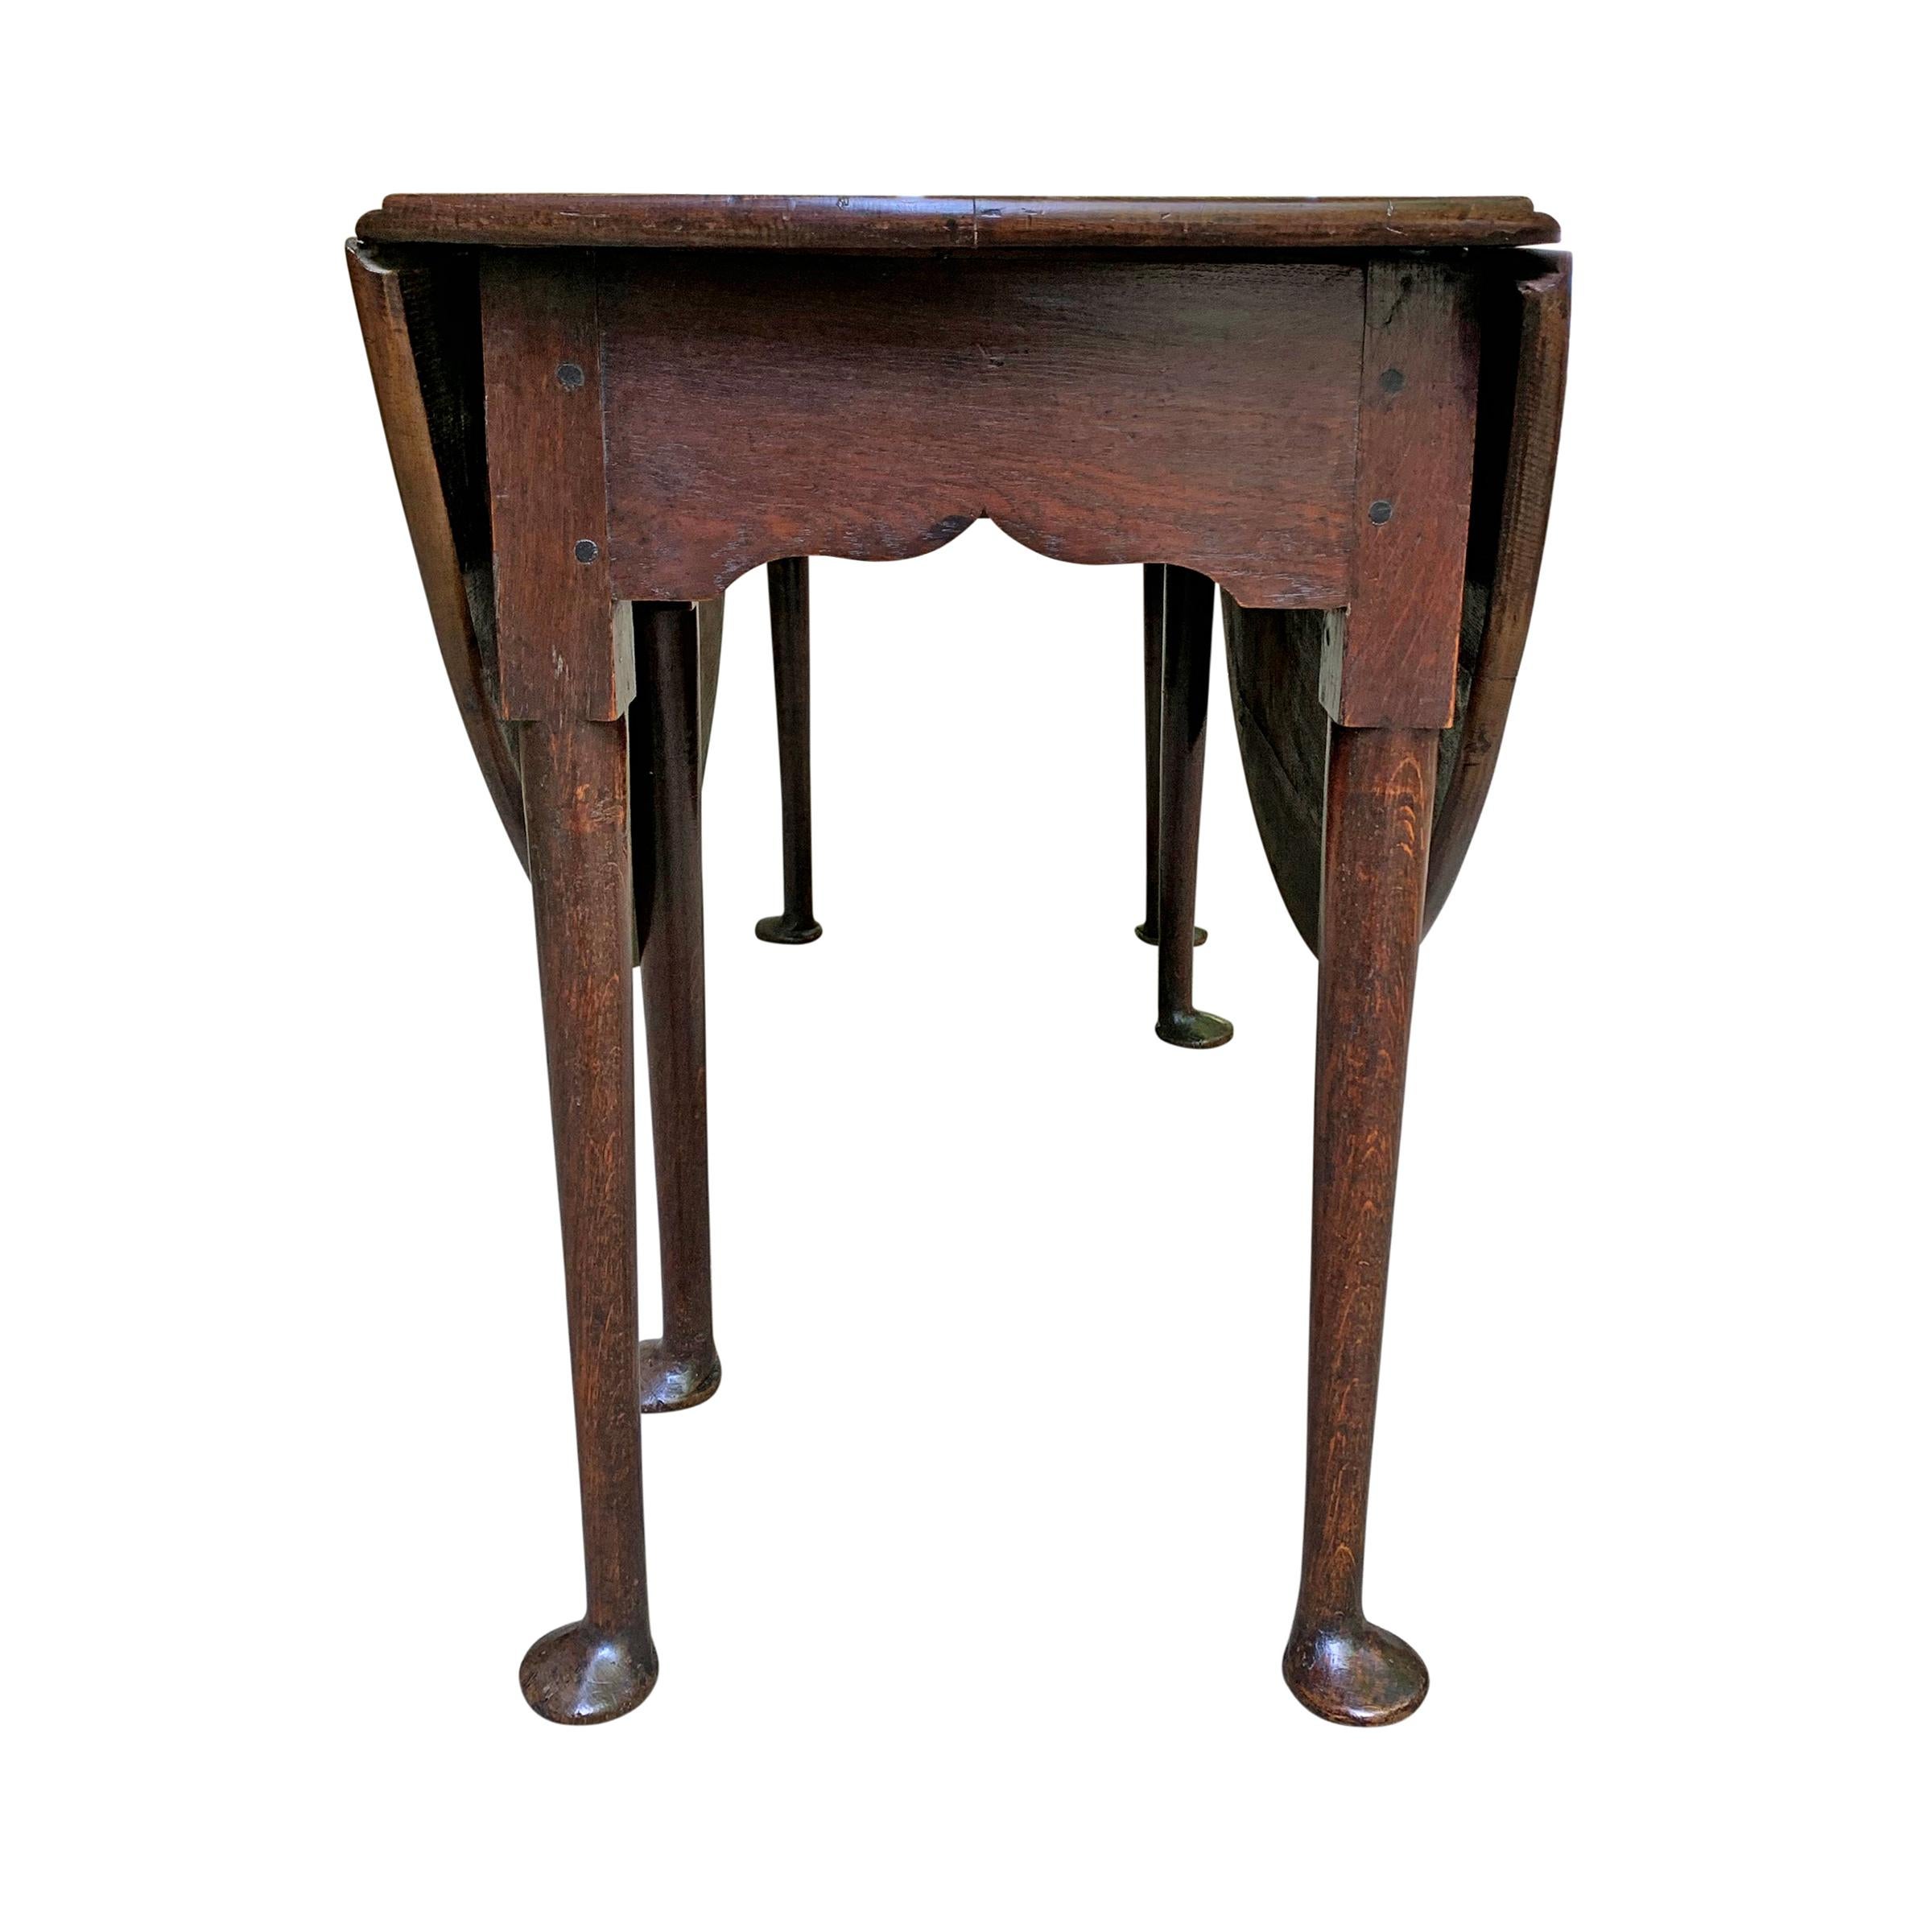 Oak Early 19th Century English Queen Anne Gate-Leg Table